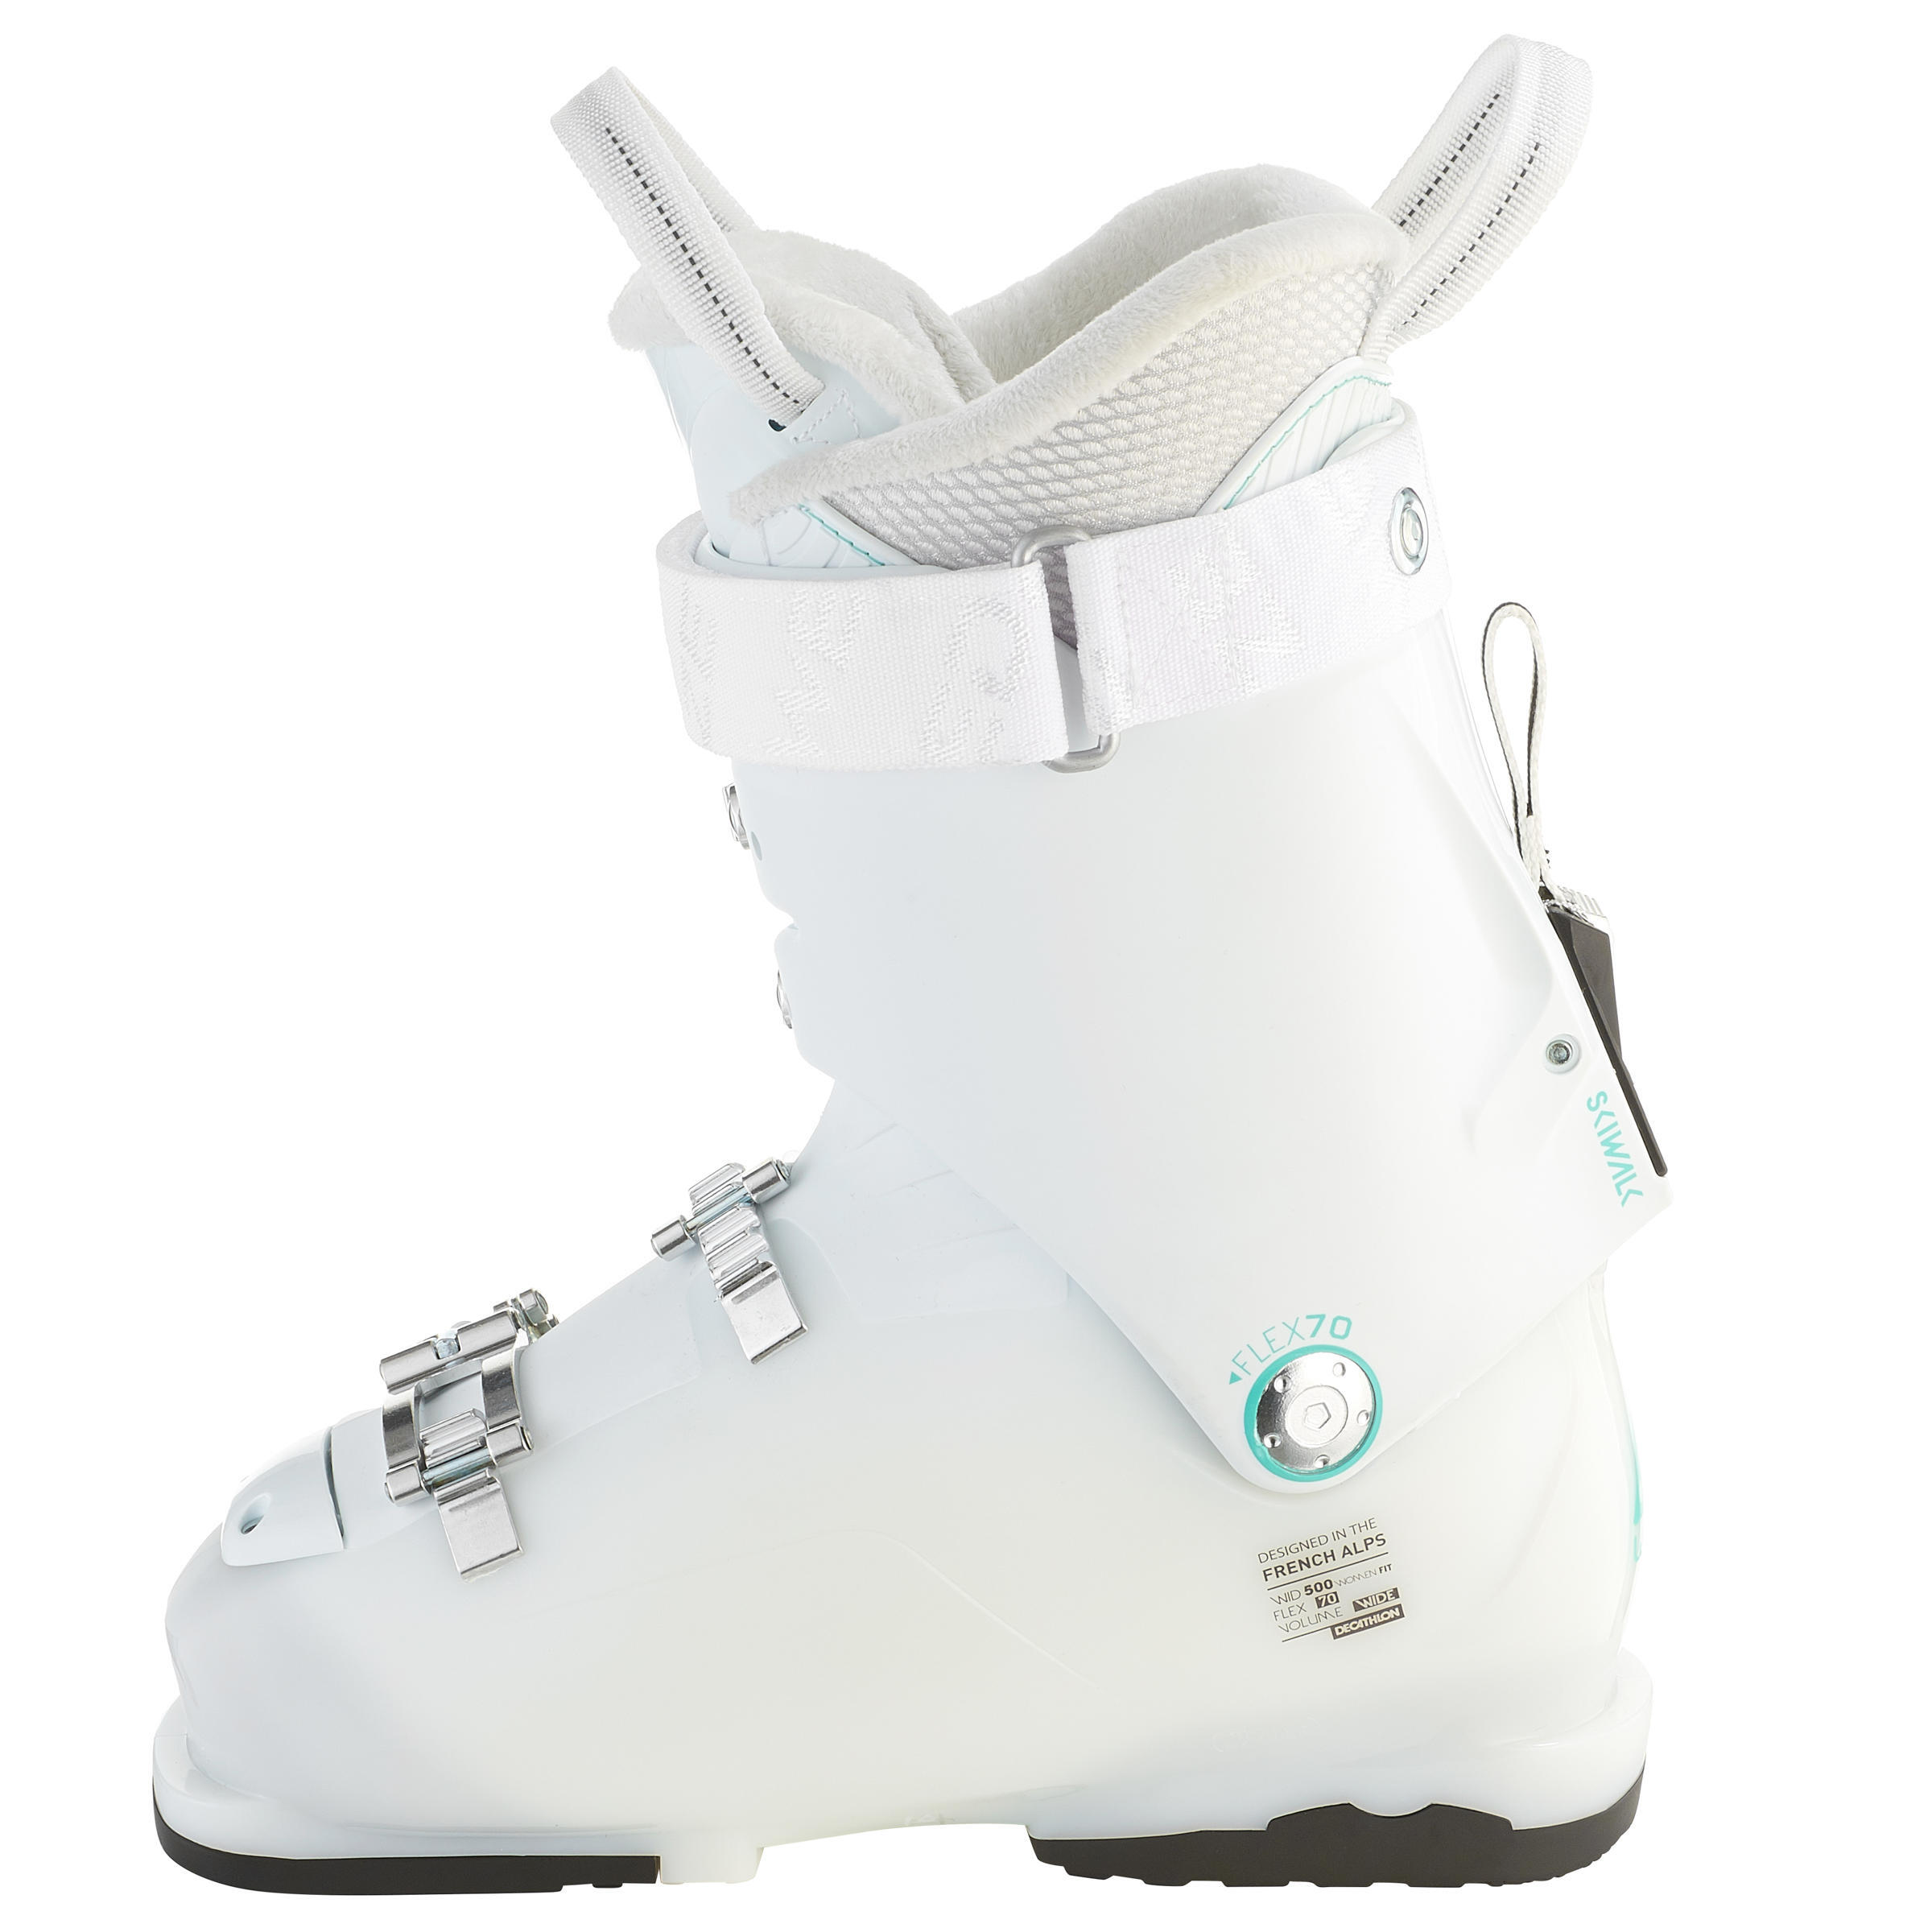 Refurbished Womens Downhill Ski Boots White - C Grade 7/7